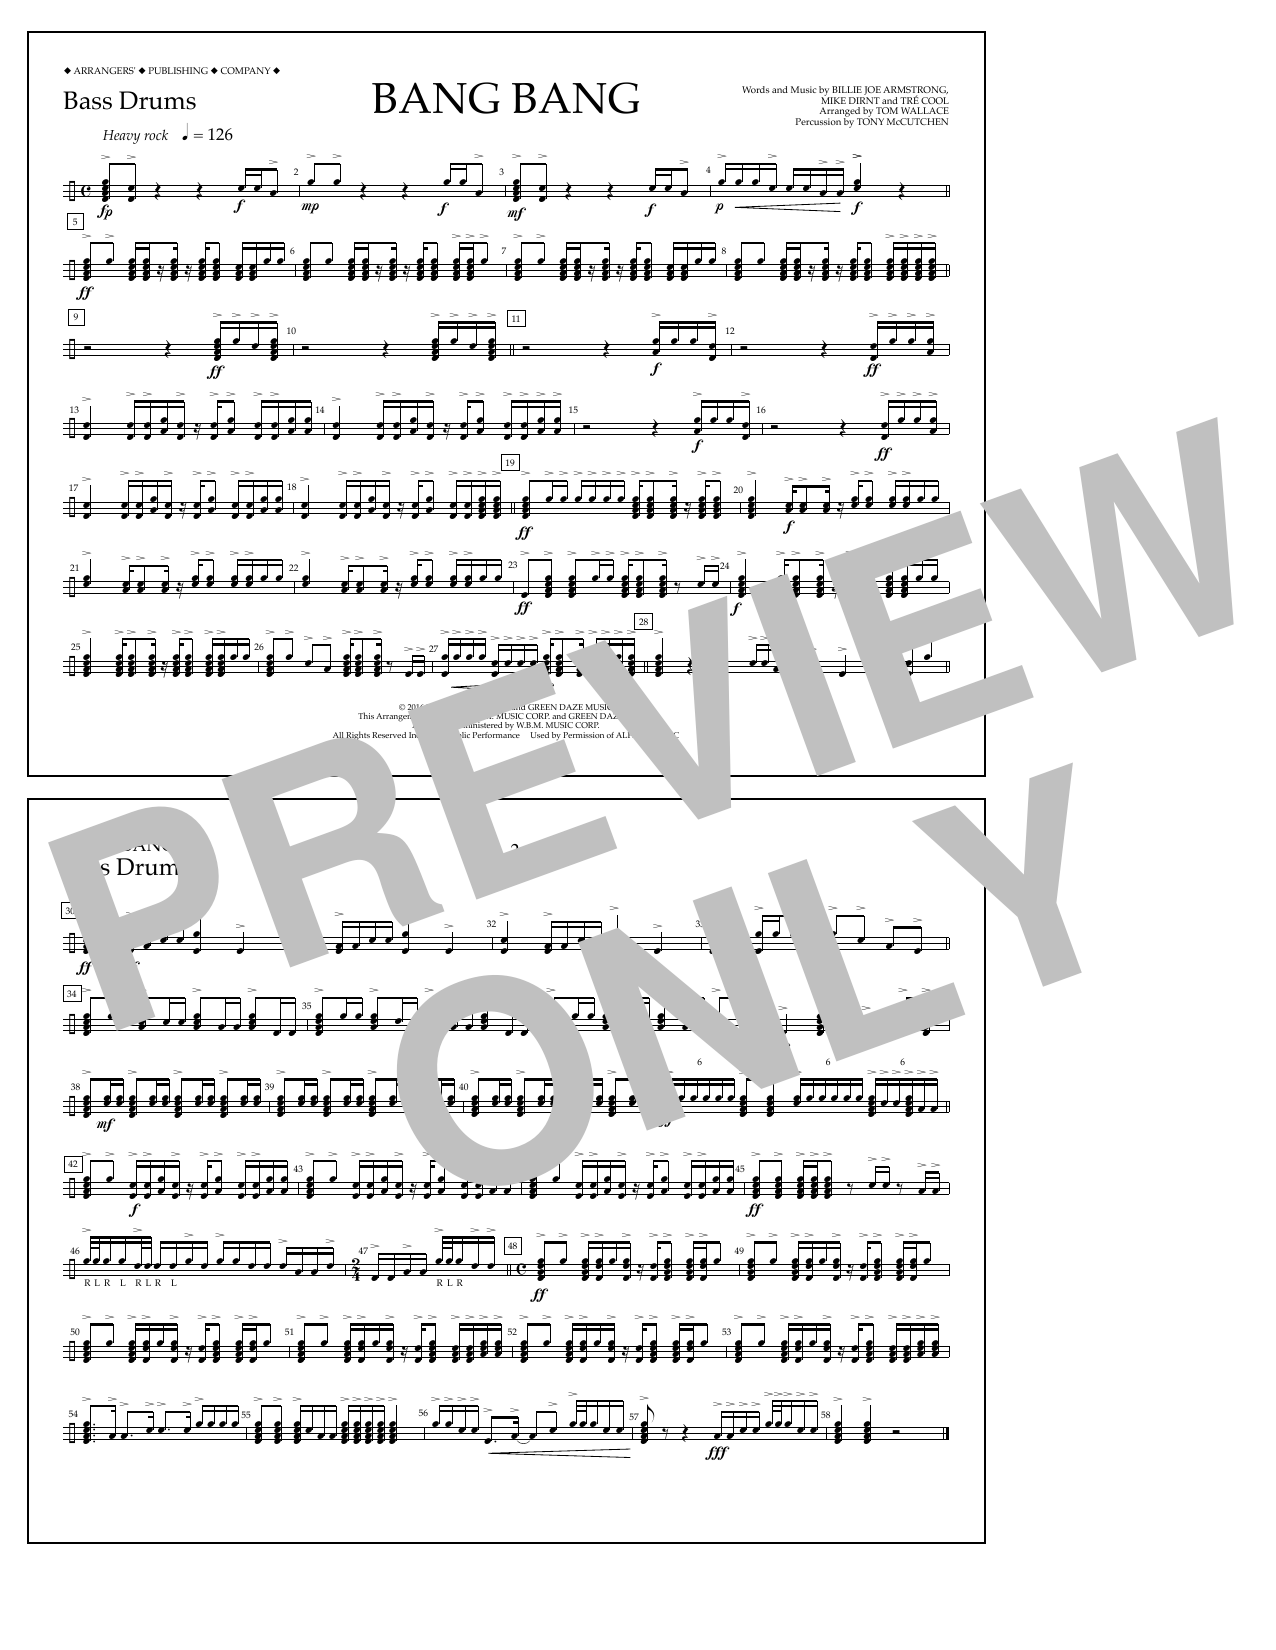 Tom Wallace Bang Bang - Bass Drums Sheet Music Notes & Chords for Marching Band - Download or Print PDF